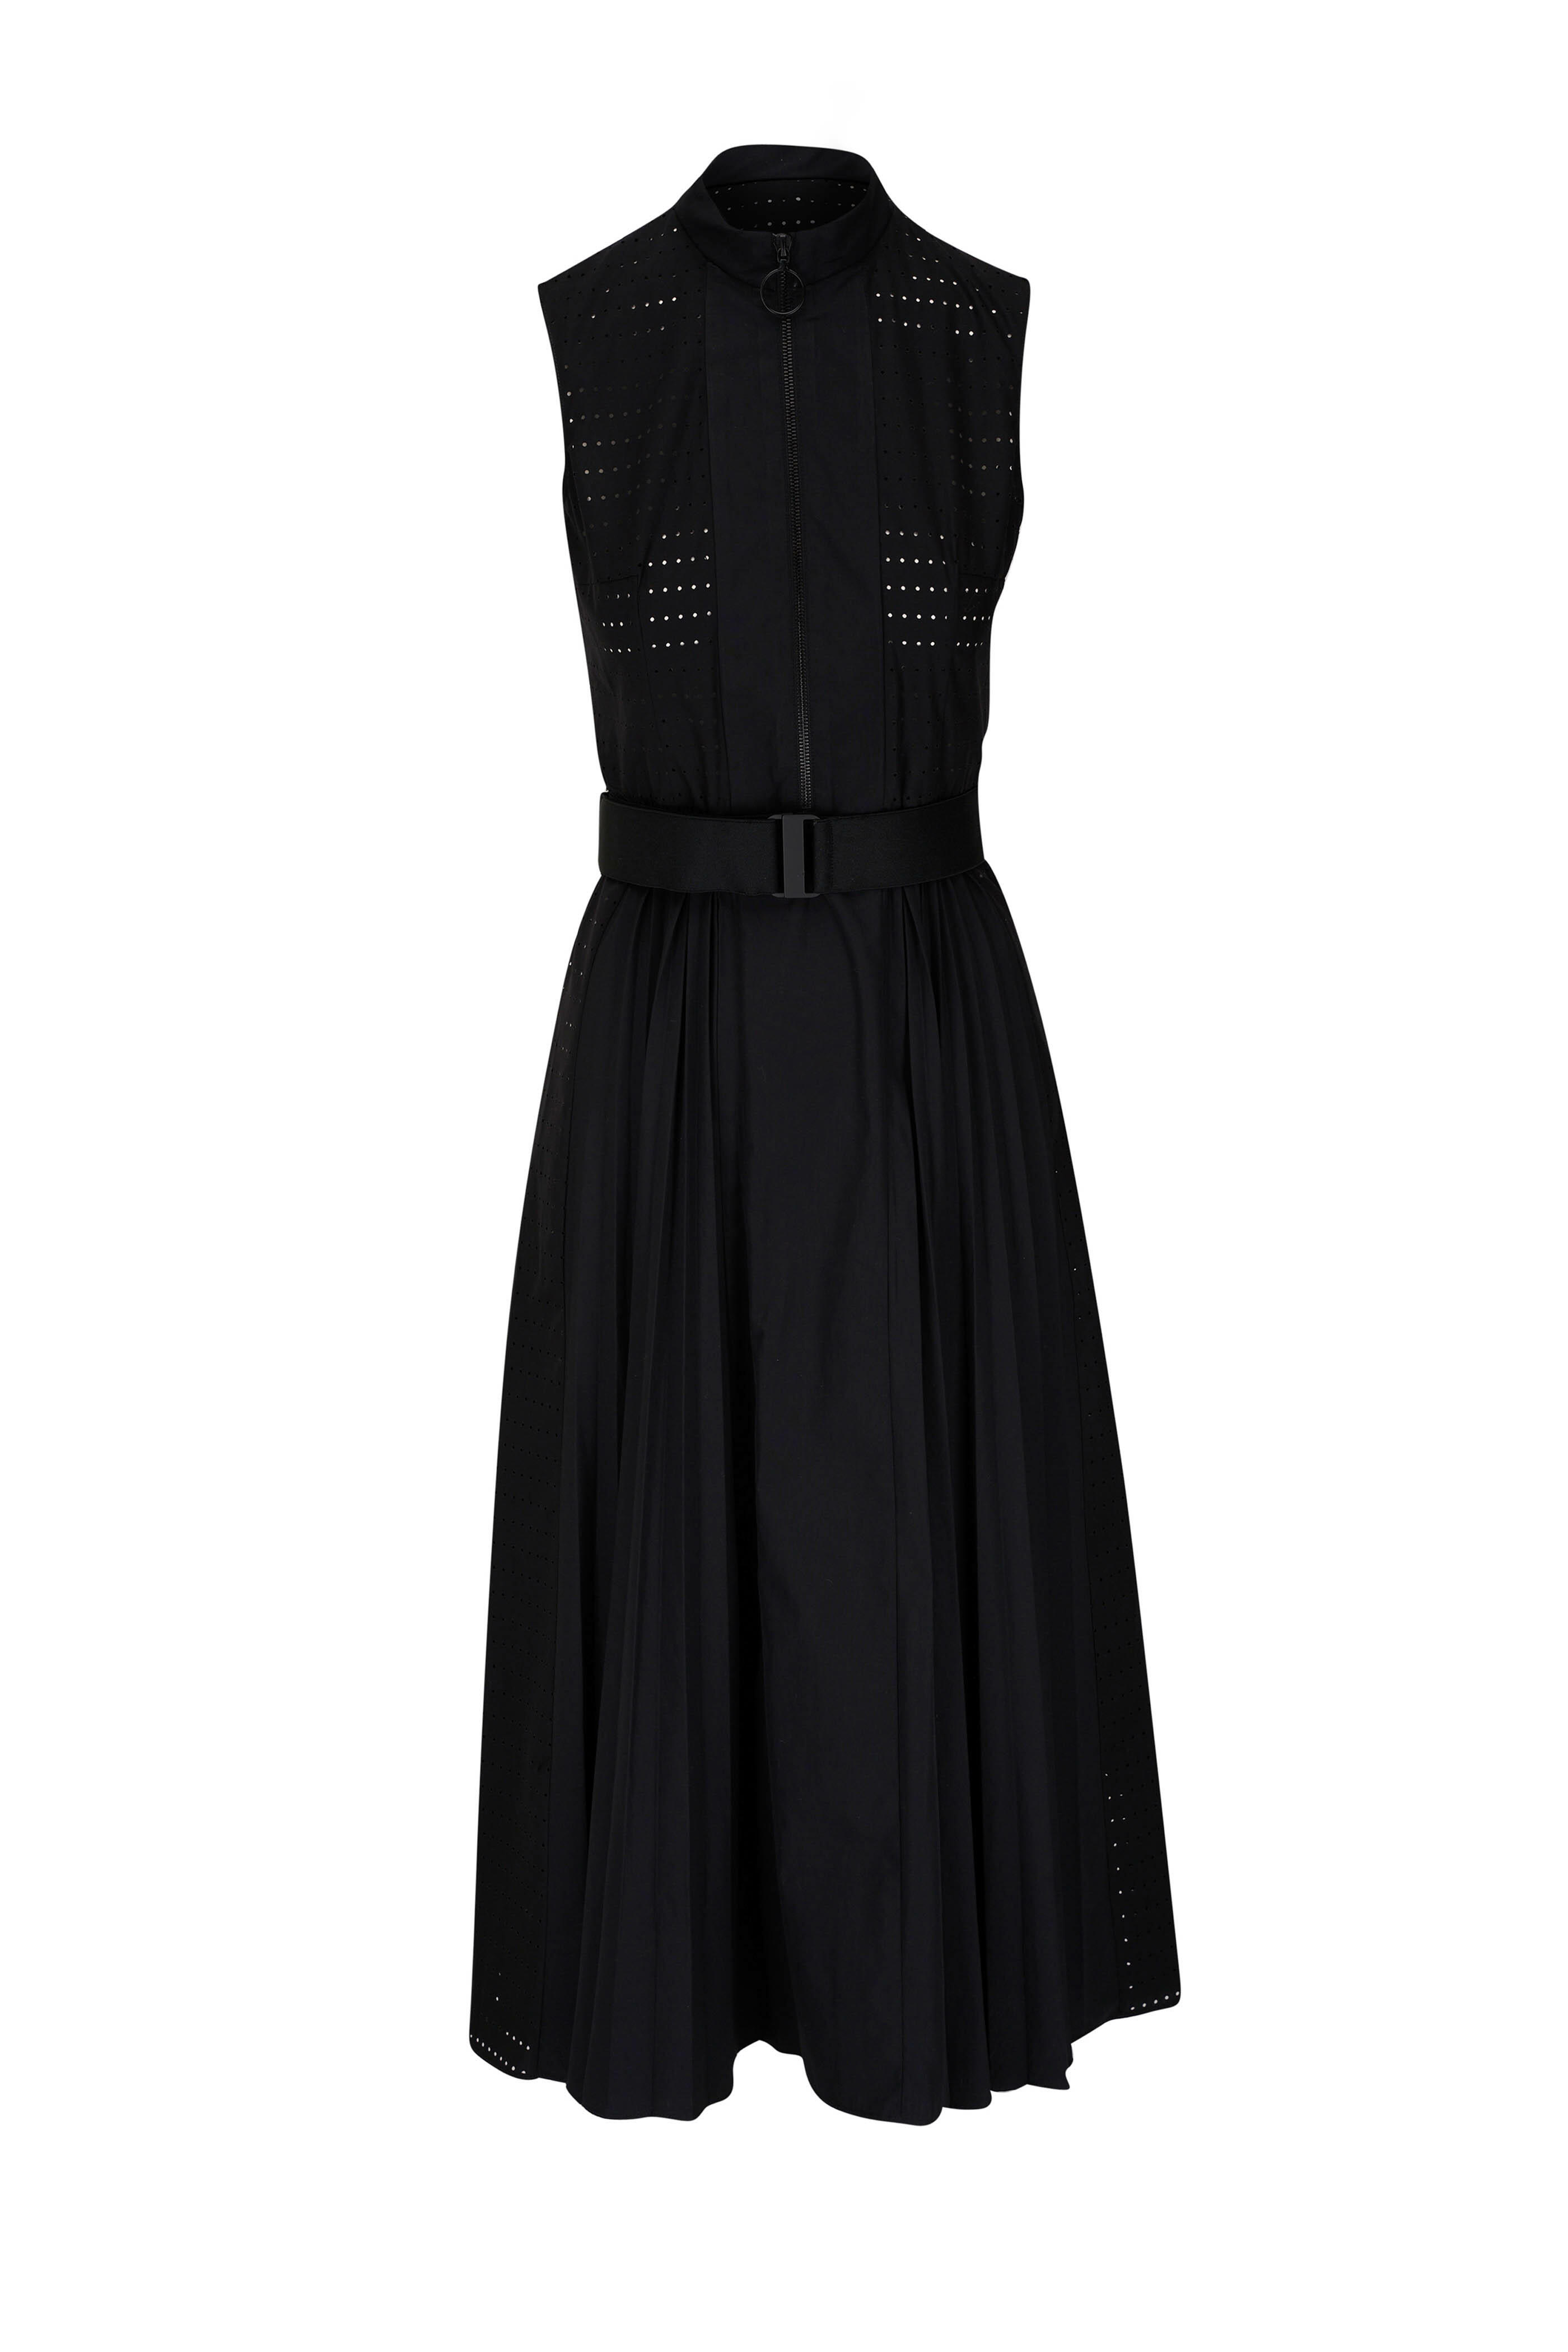 Akris Punto Black Wool Dress sz 14 – Michael's Consignment NYC